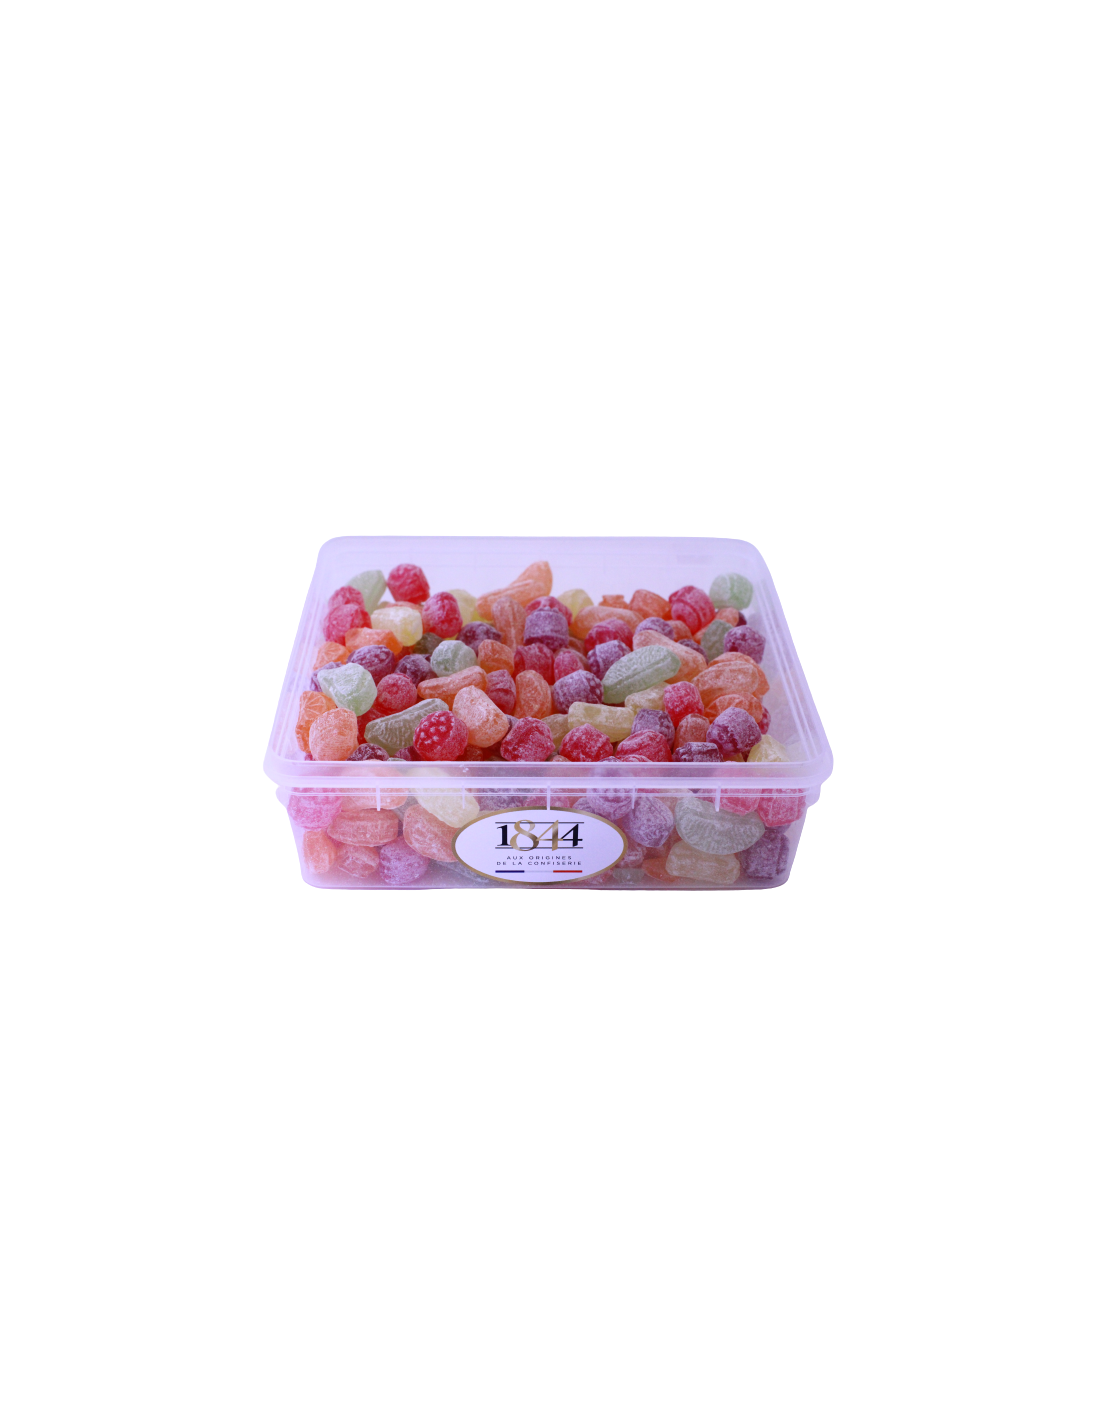 Salade de fruits : bonbon en sachet confiseur de 200 g